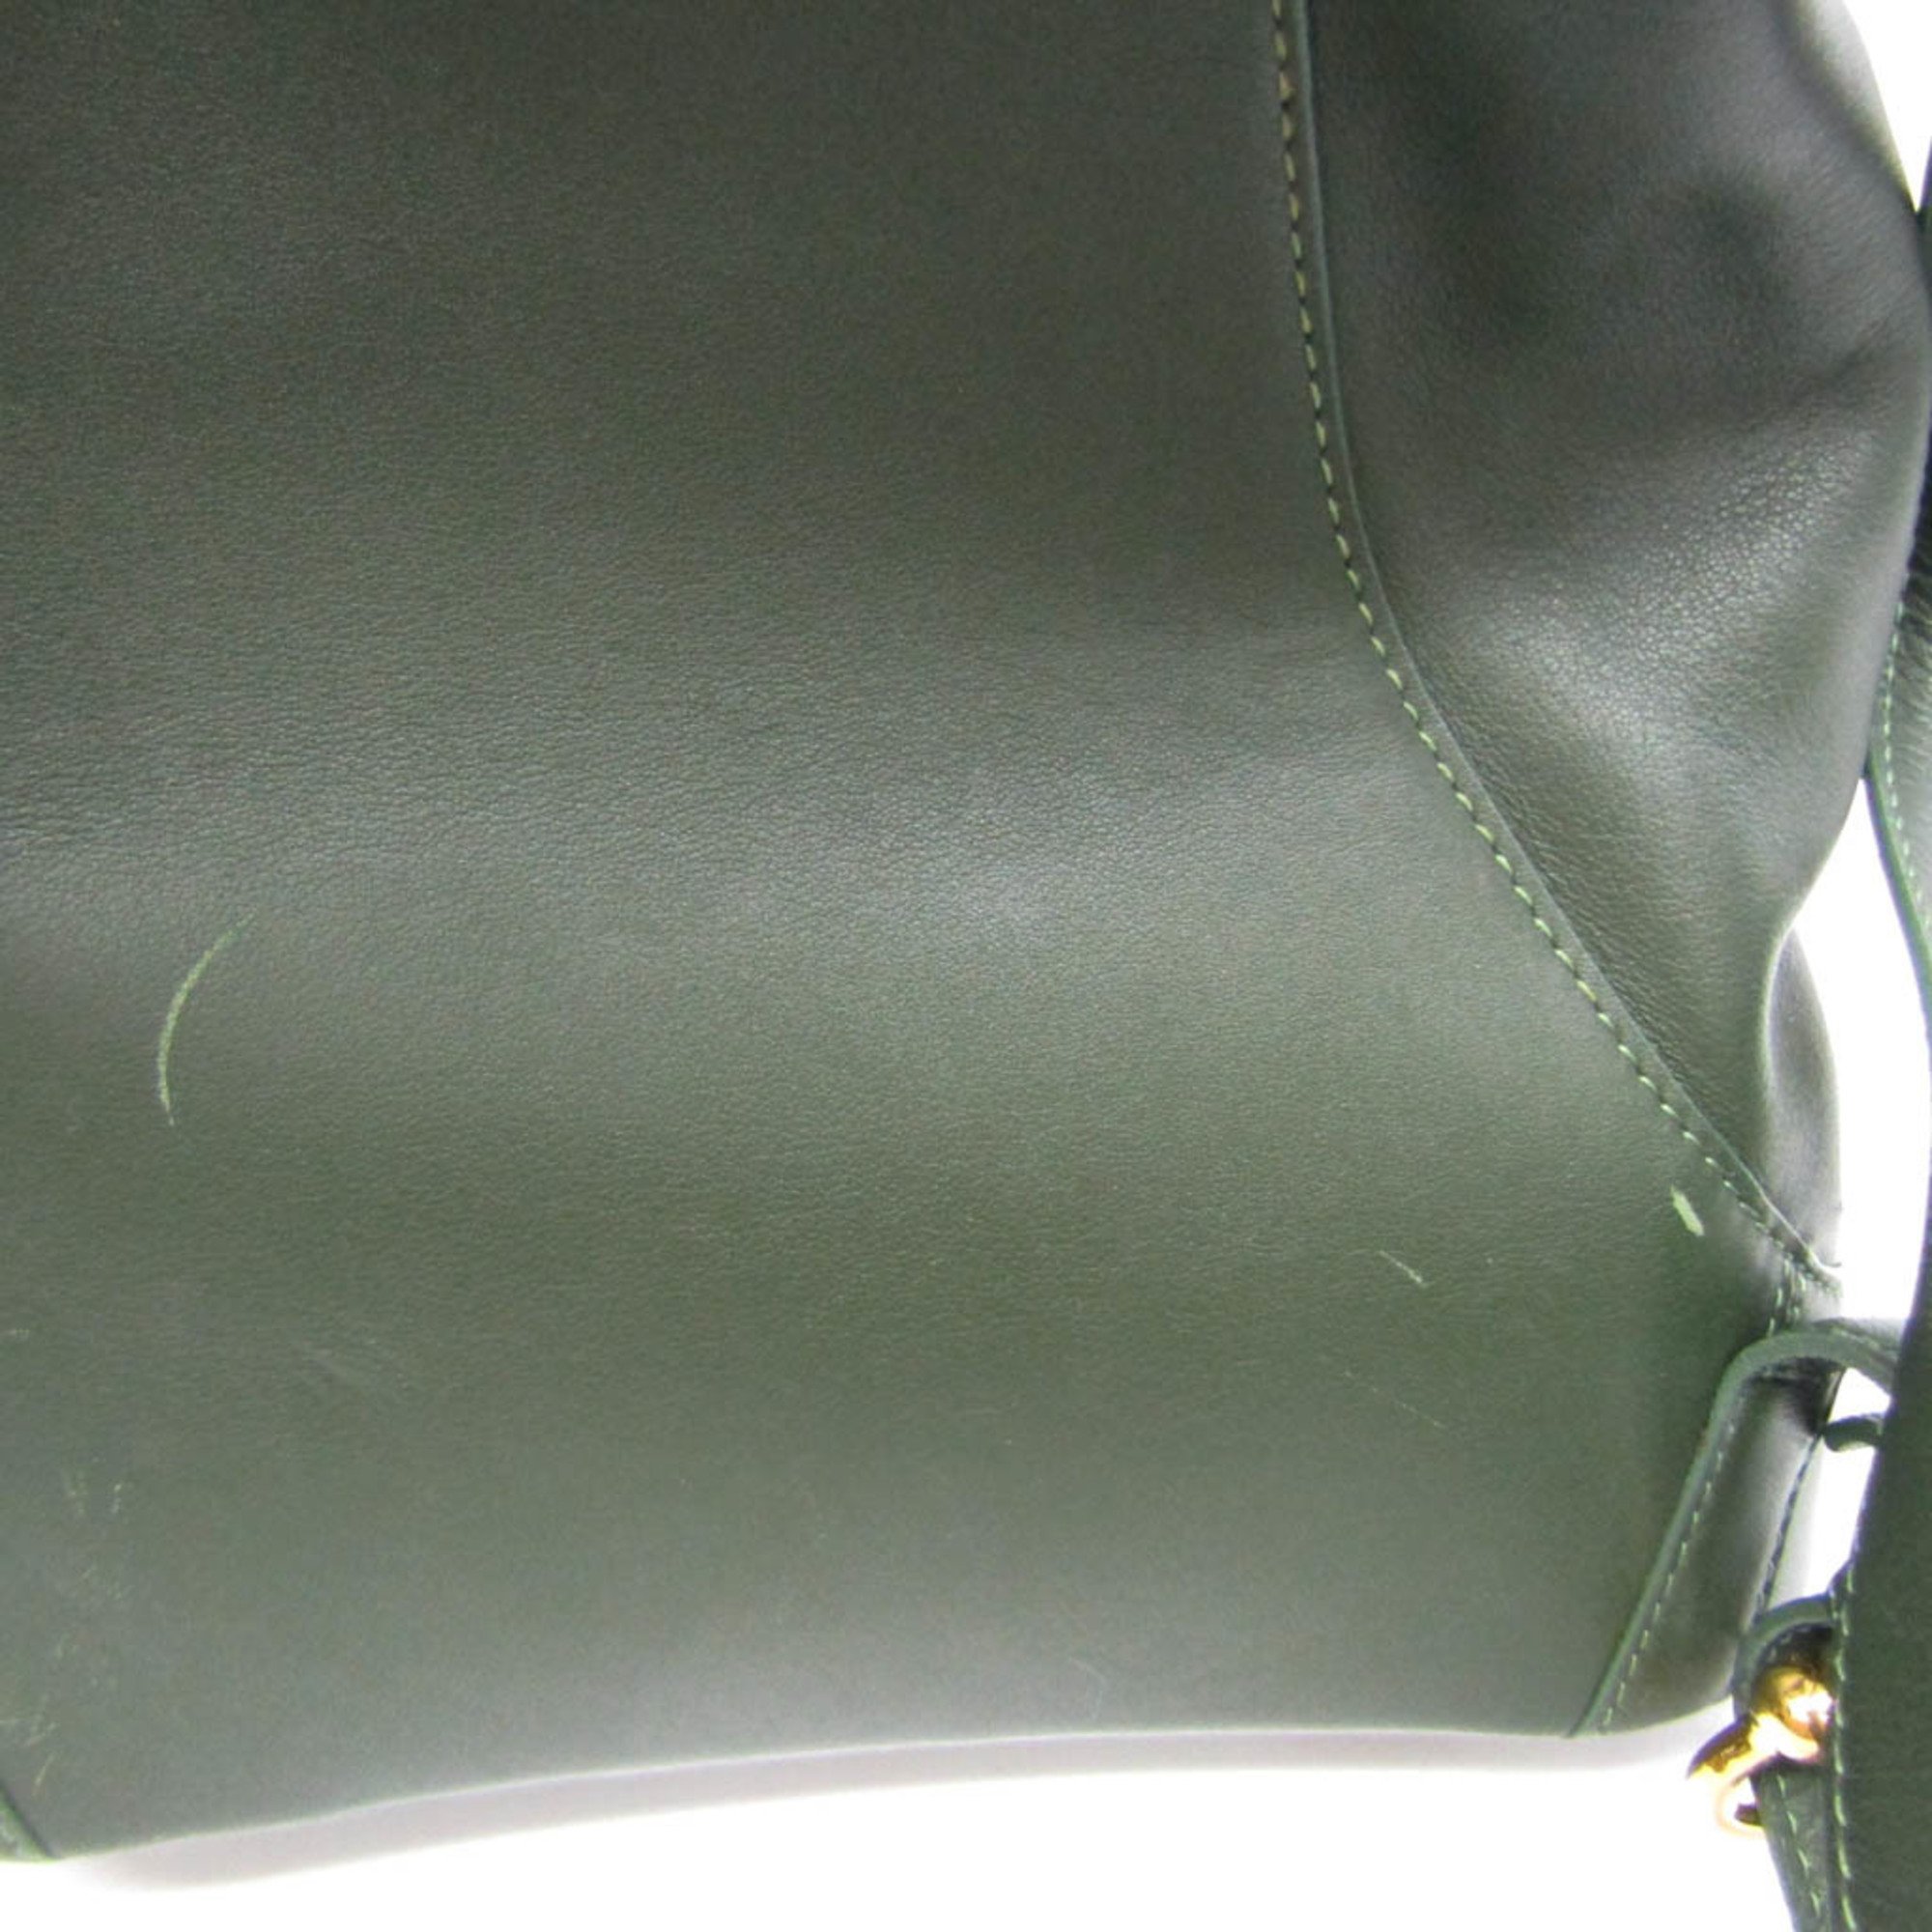 Loewe Anton Women's Leather Shoulder Bag Dark Green